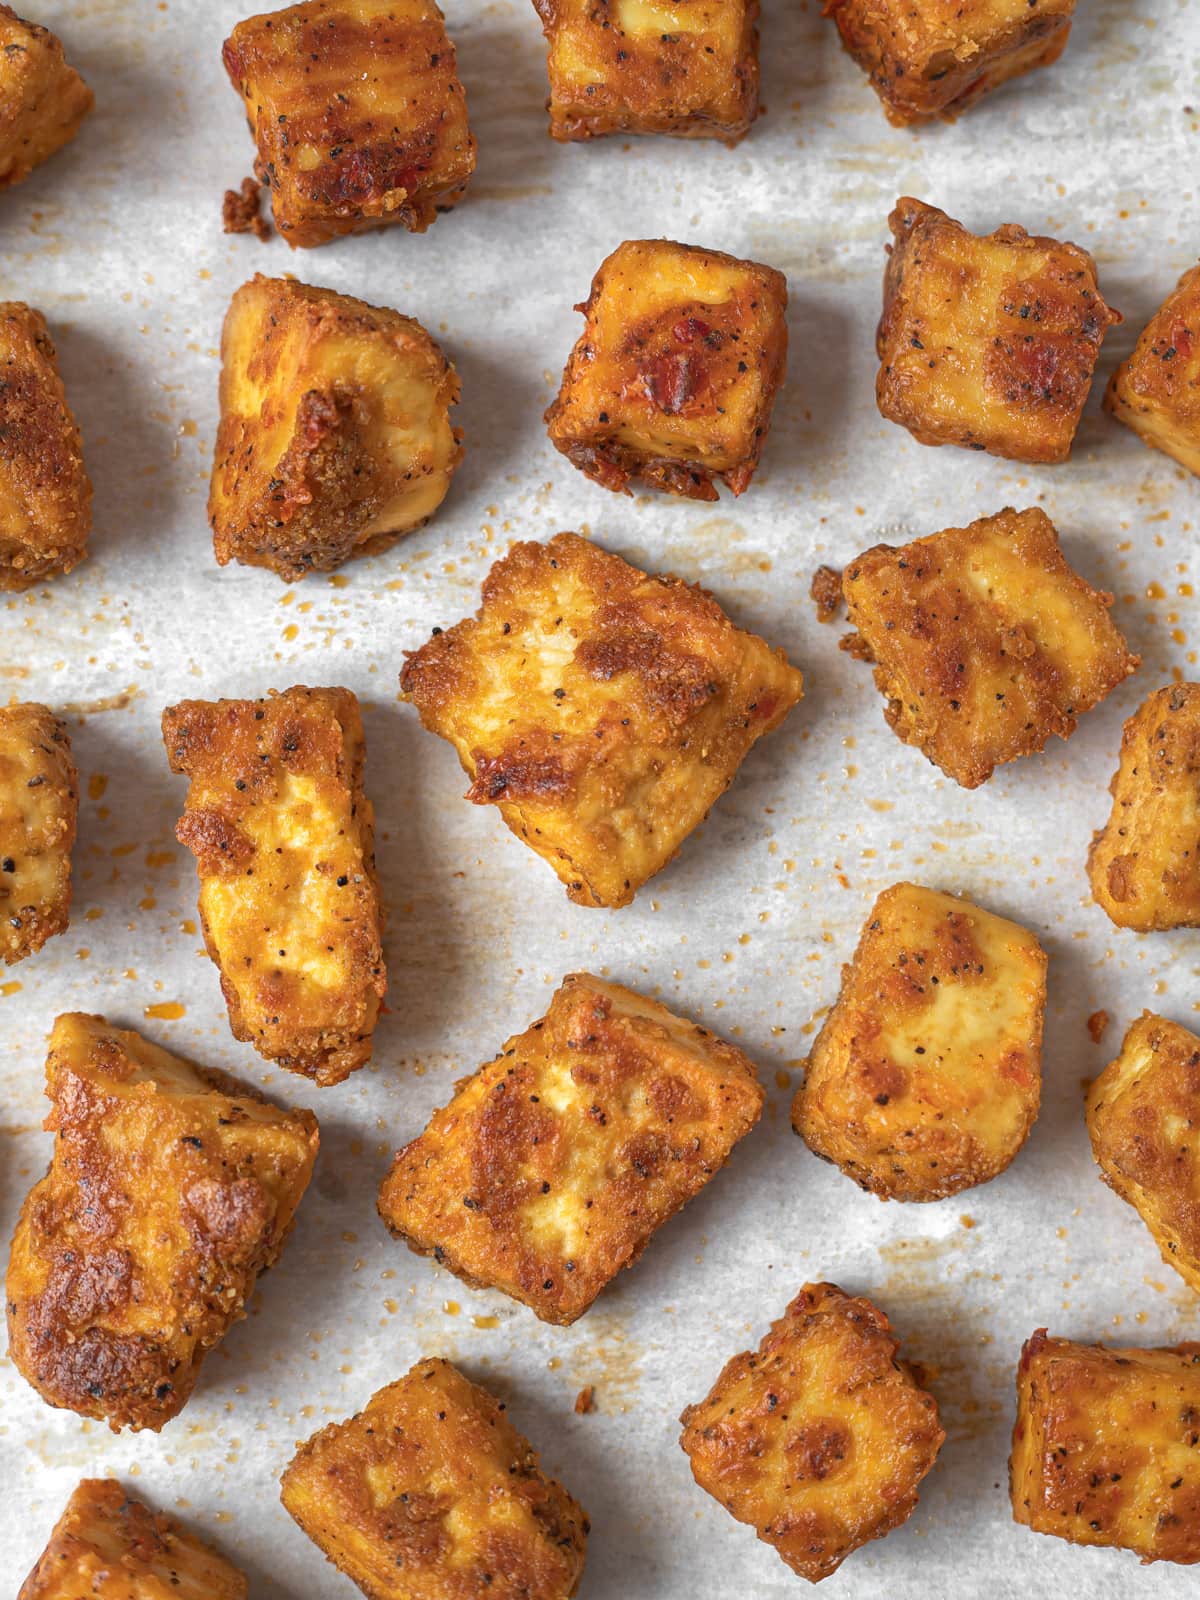 Crispy, golden brown baked tofu nuggets on a baking sheet.